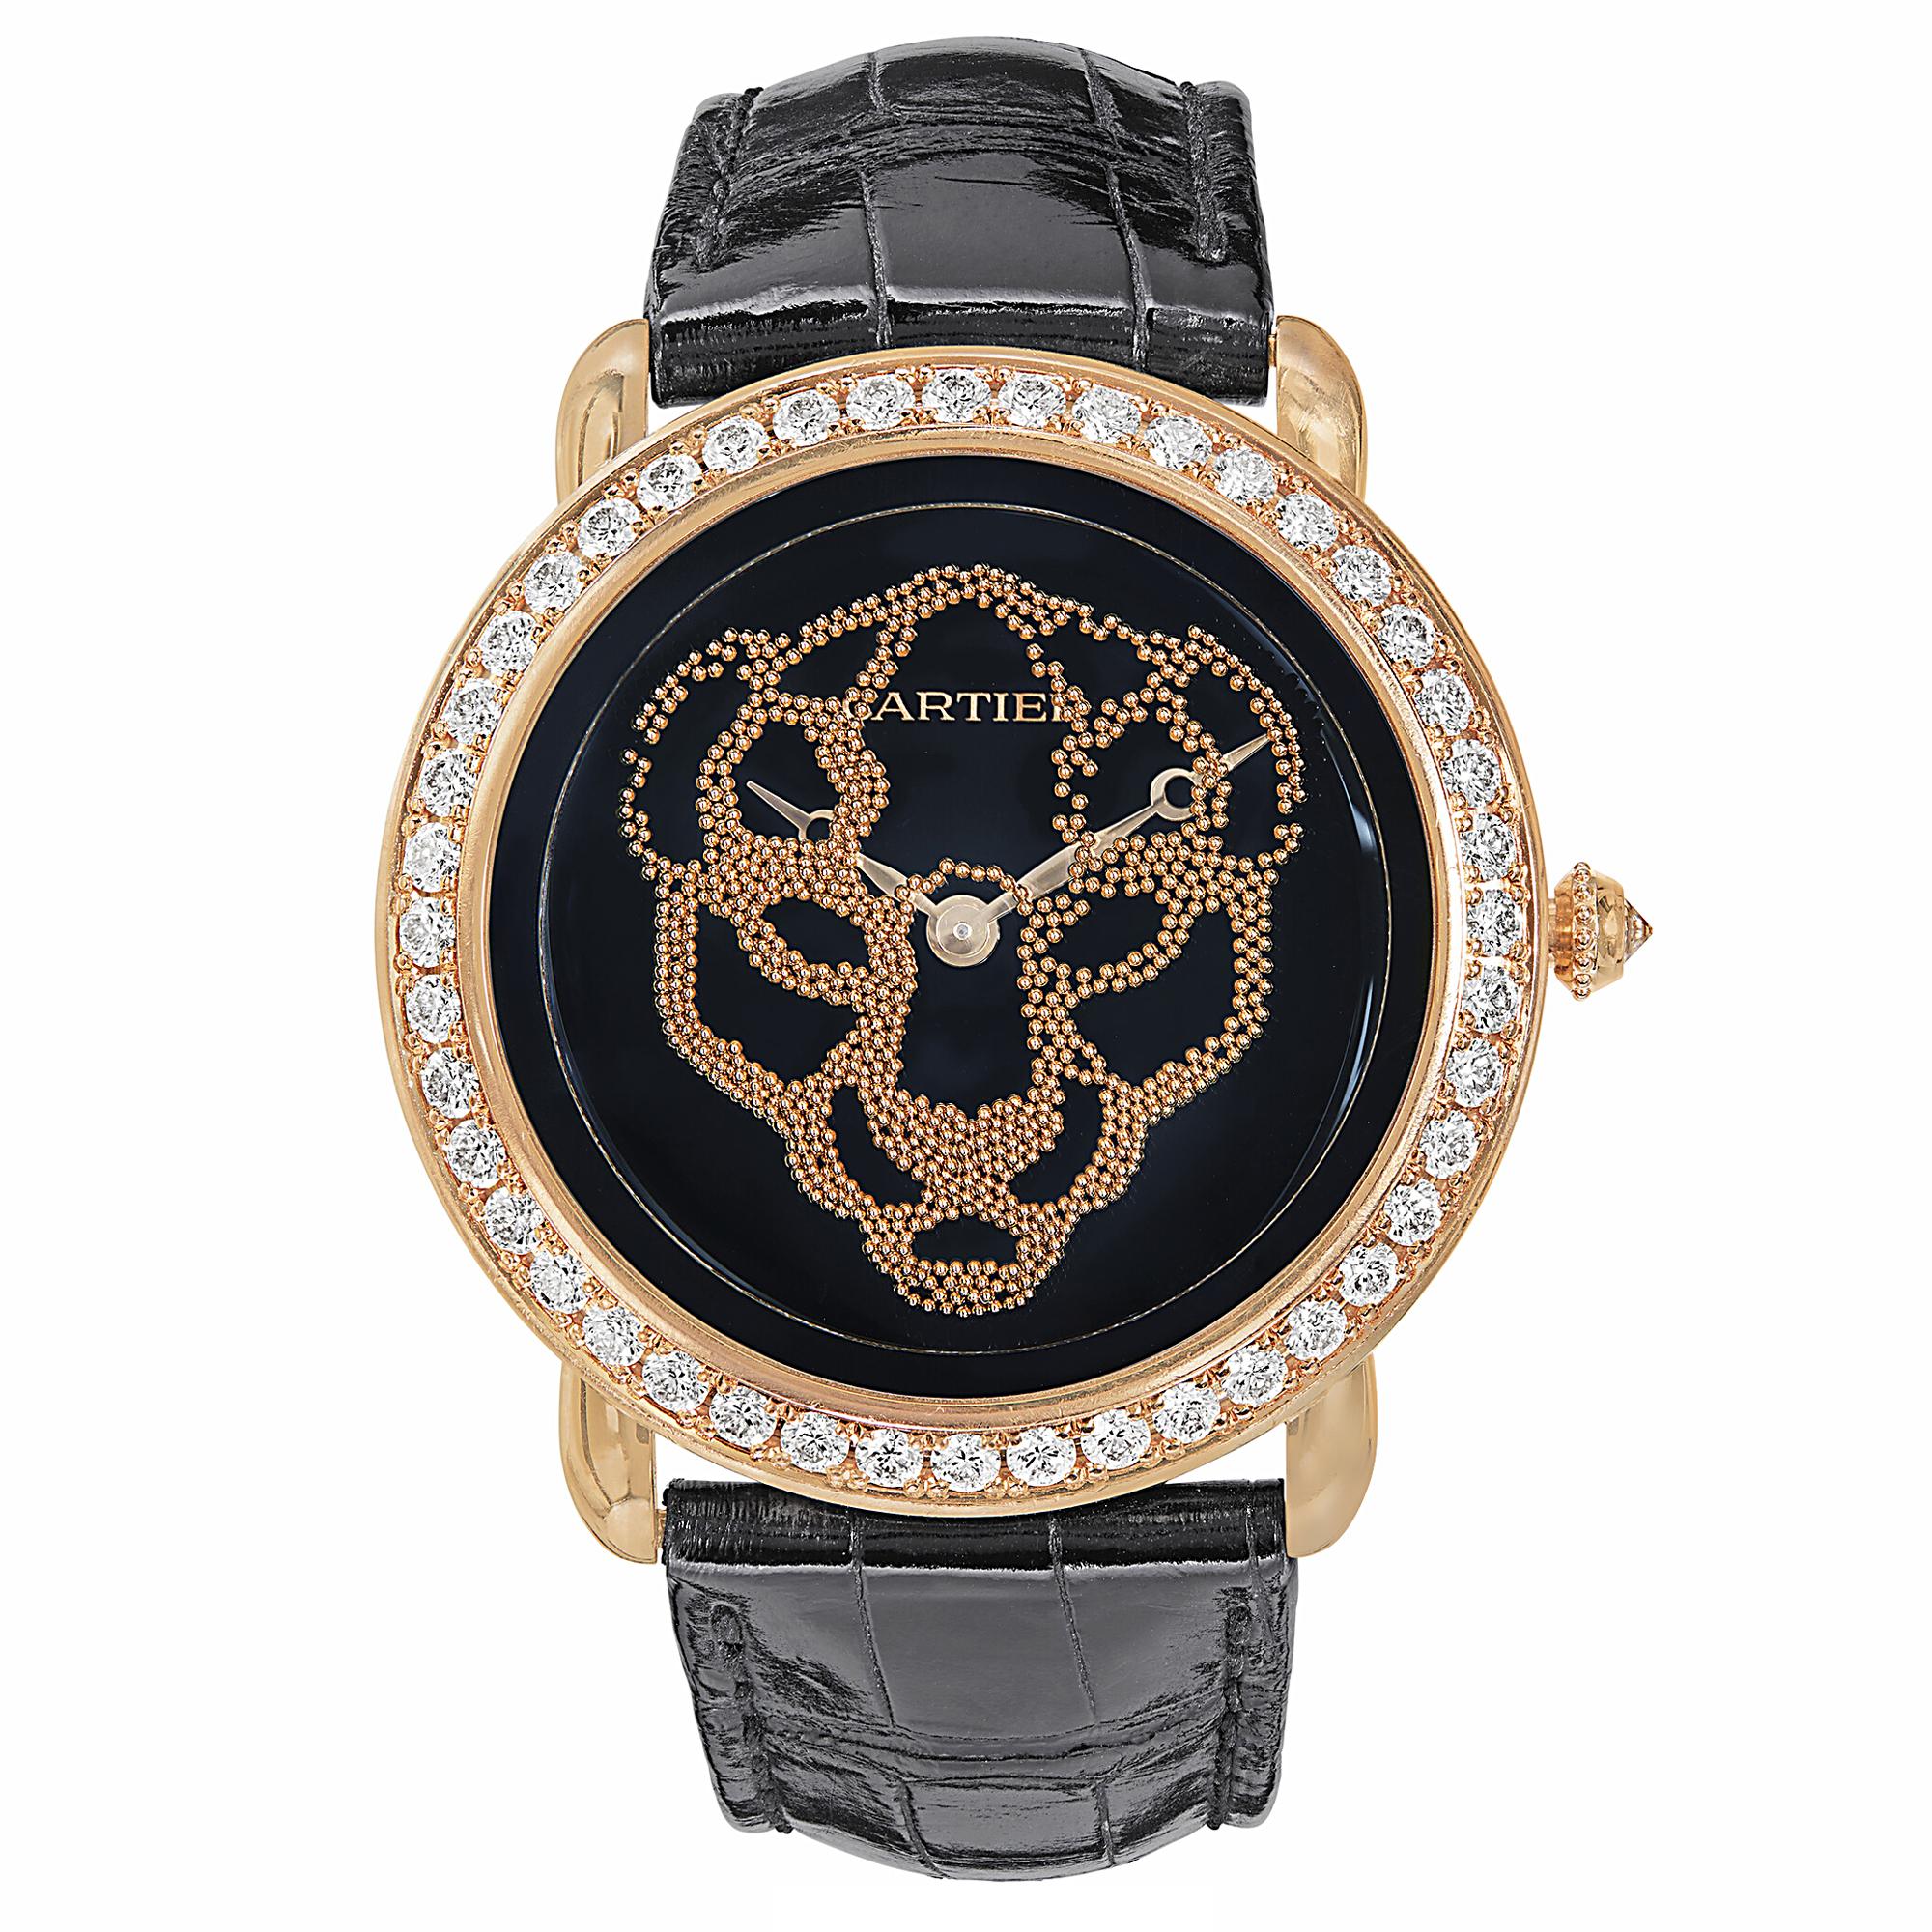 Die Cartier Armbanduhr 